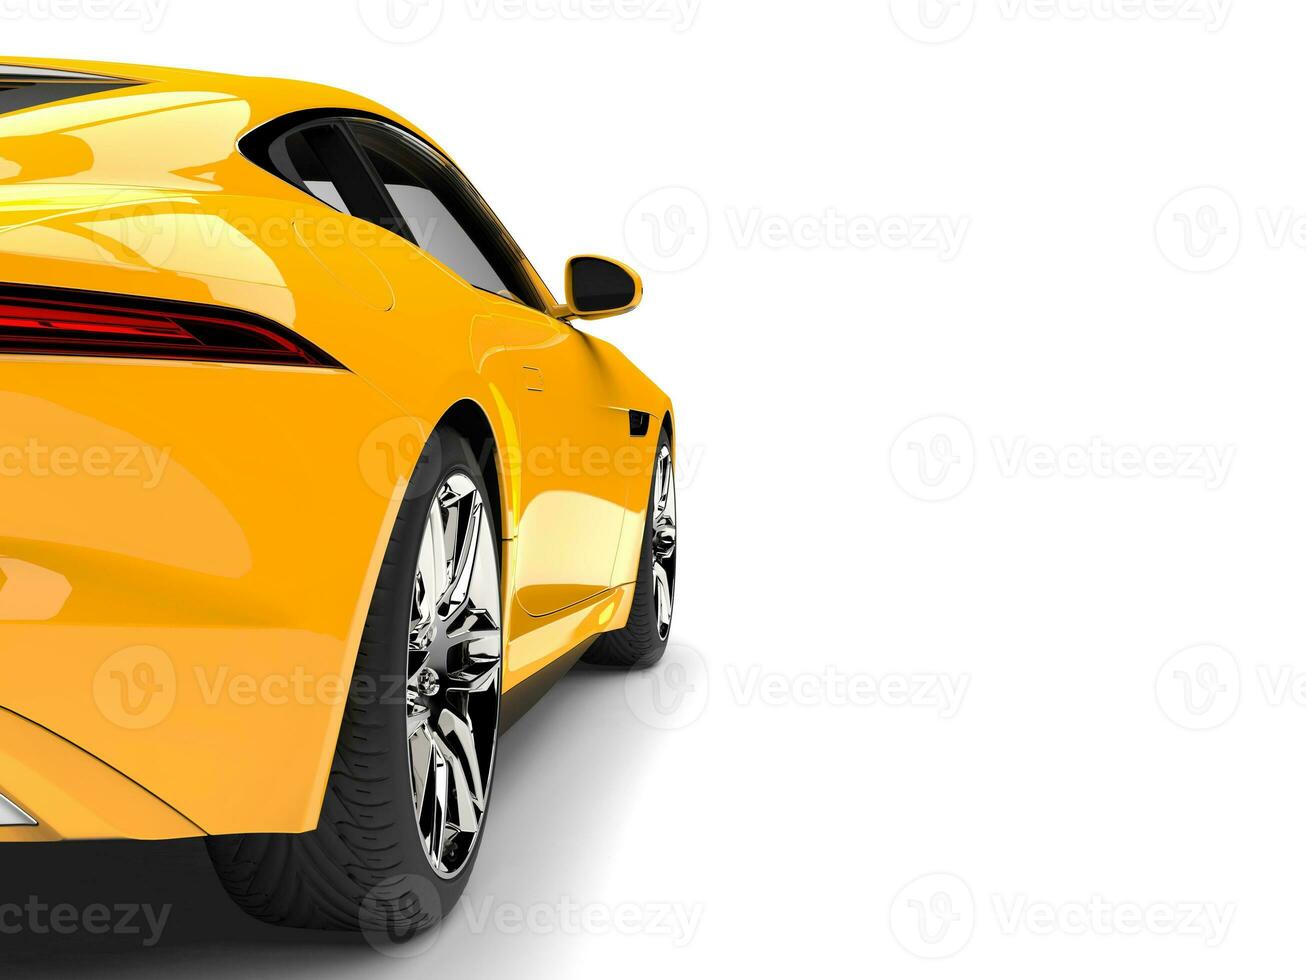 Modern fast luxury car - sun yellow color - back view cut shot photo